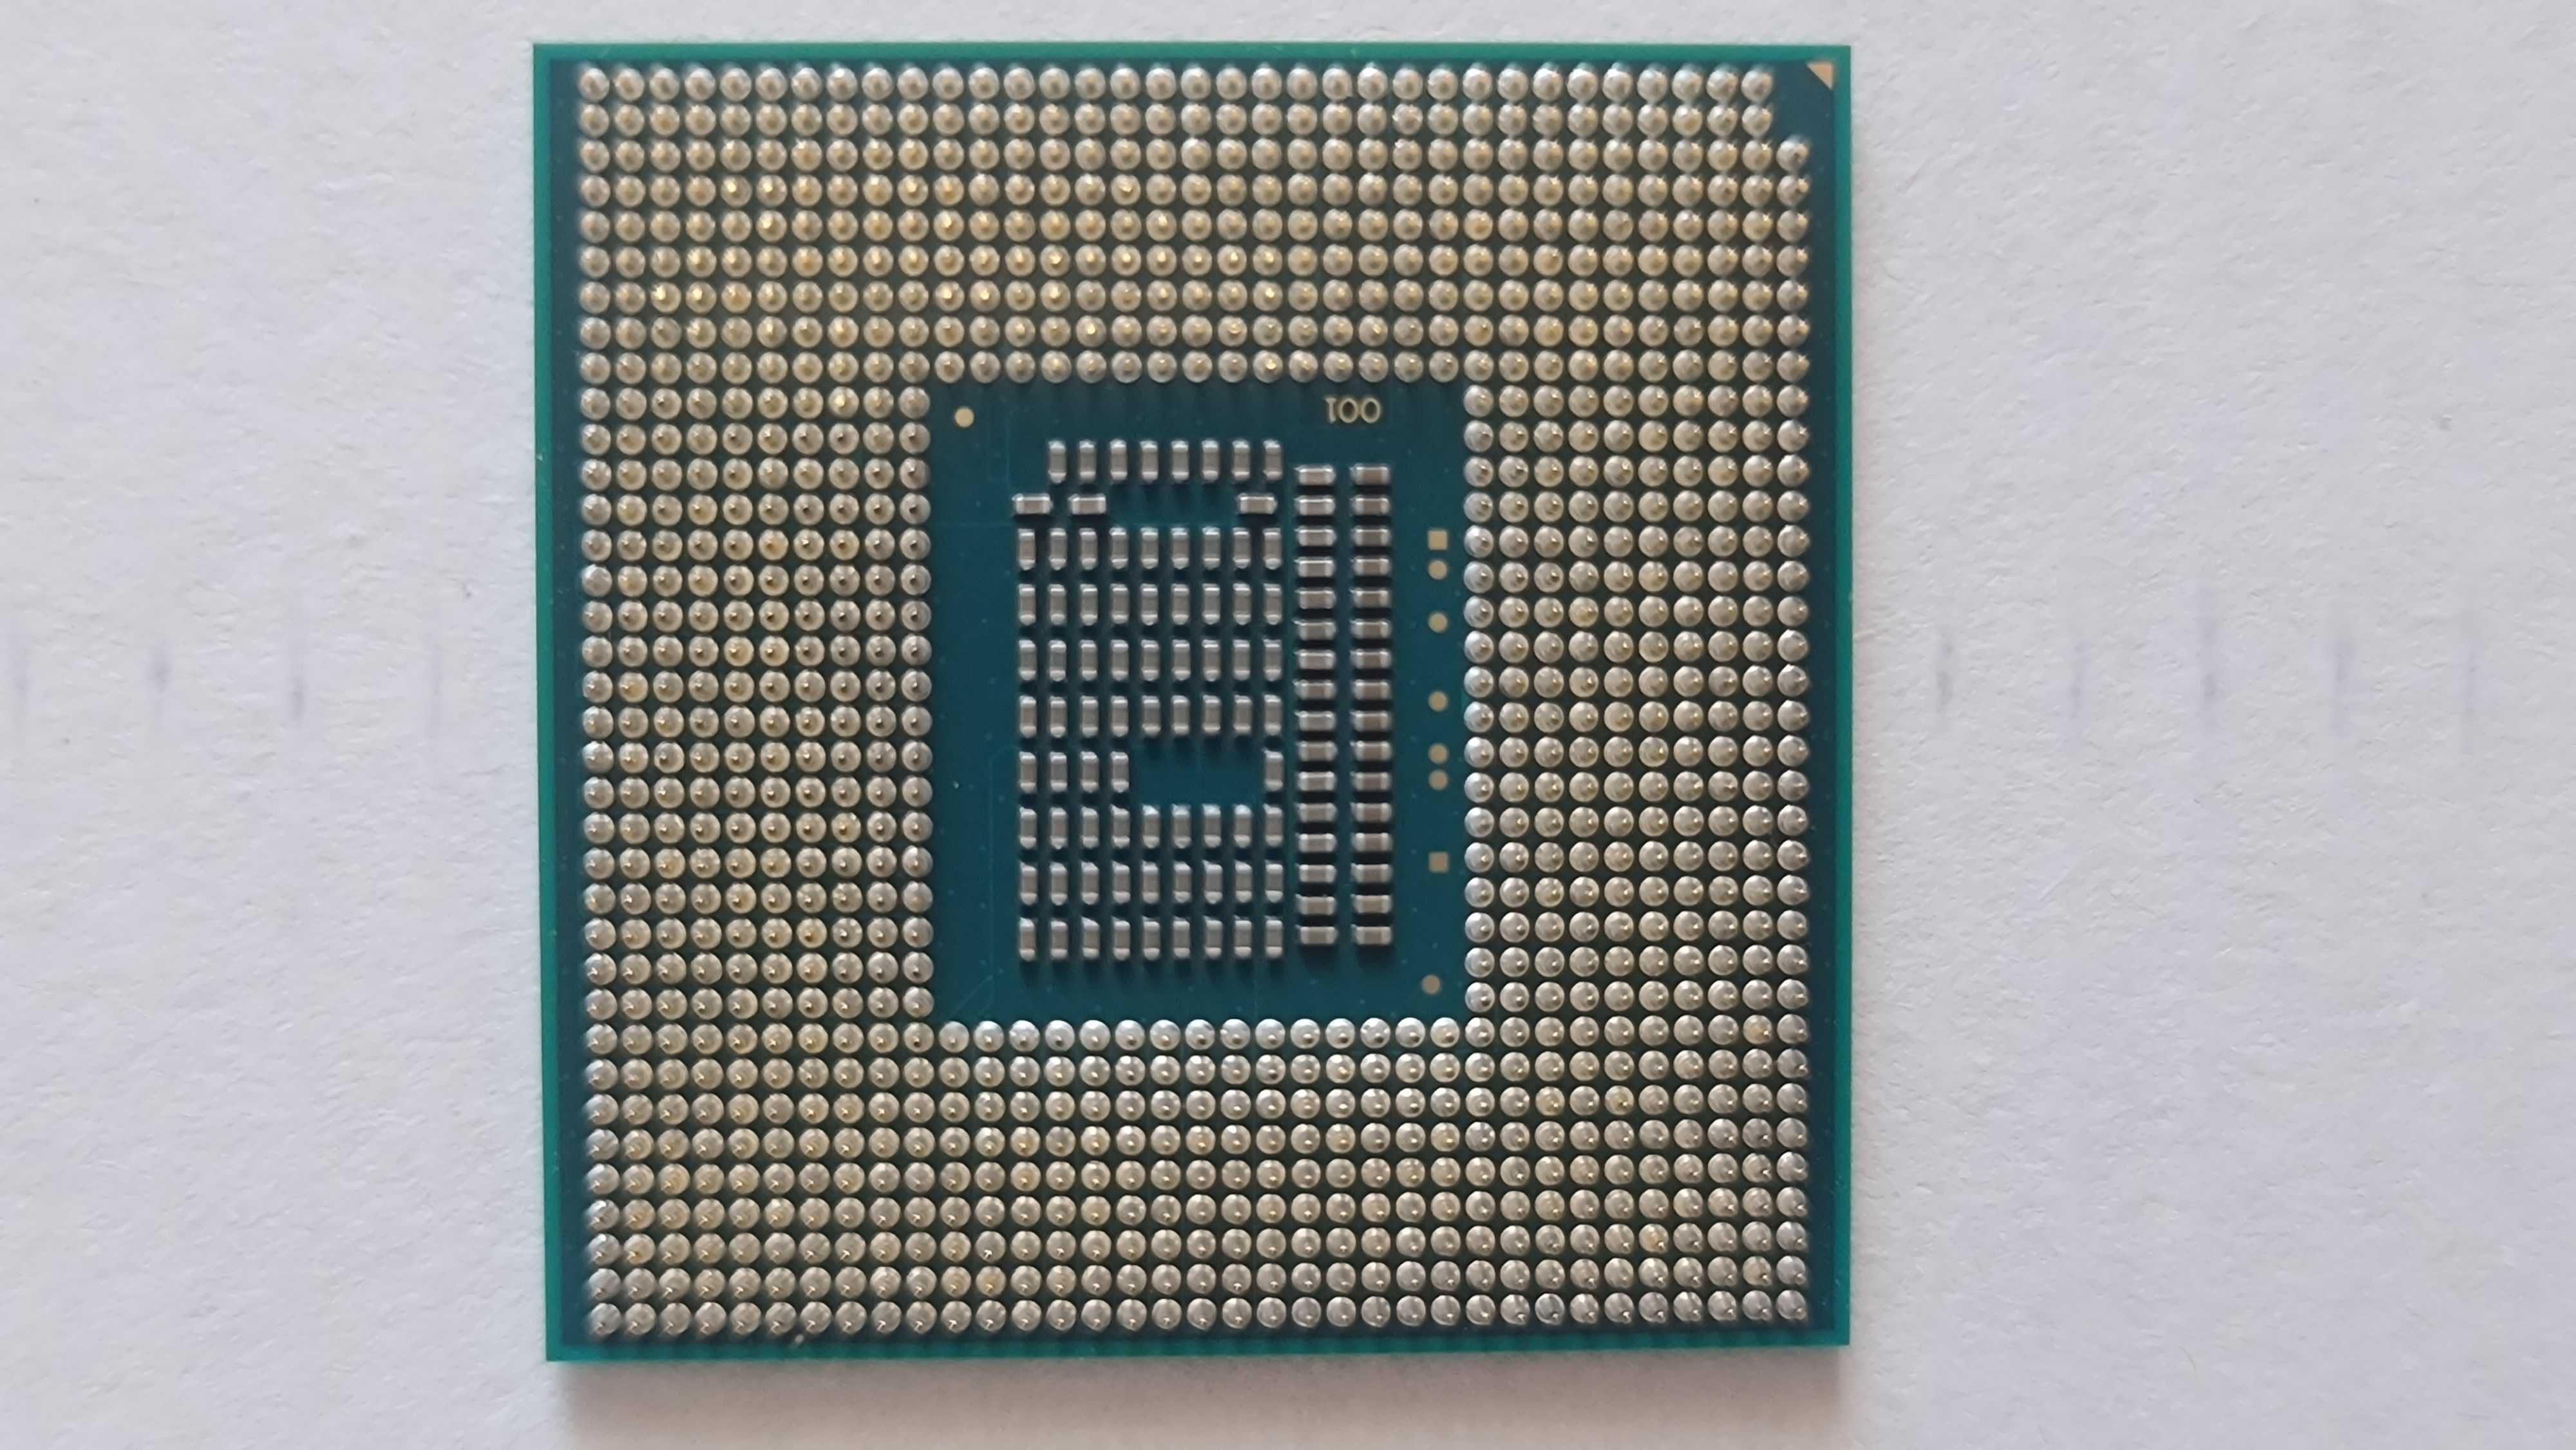 Procesor Intel Core i5-3210M Ivy Bridge FCPGA988 (SR0MZ) - gwarancja